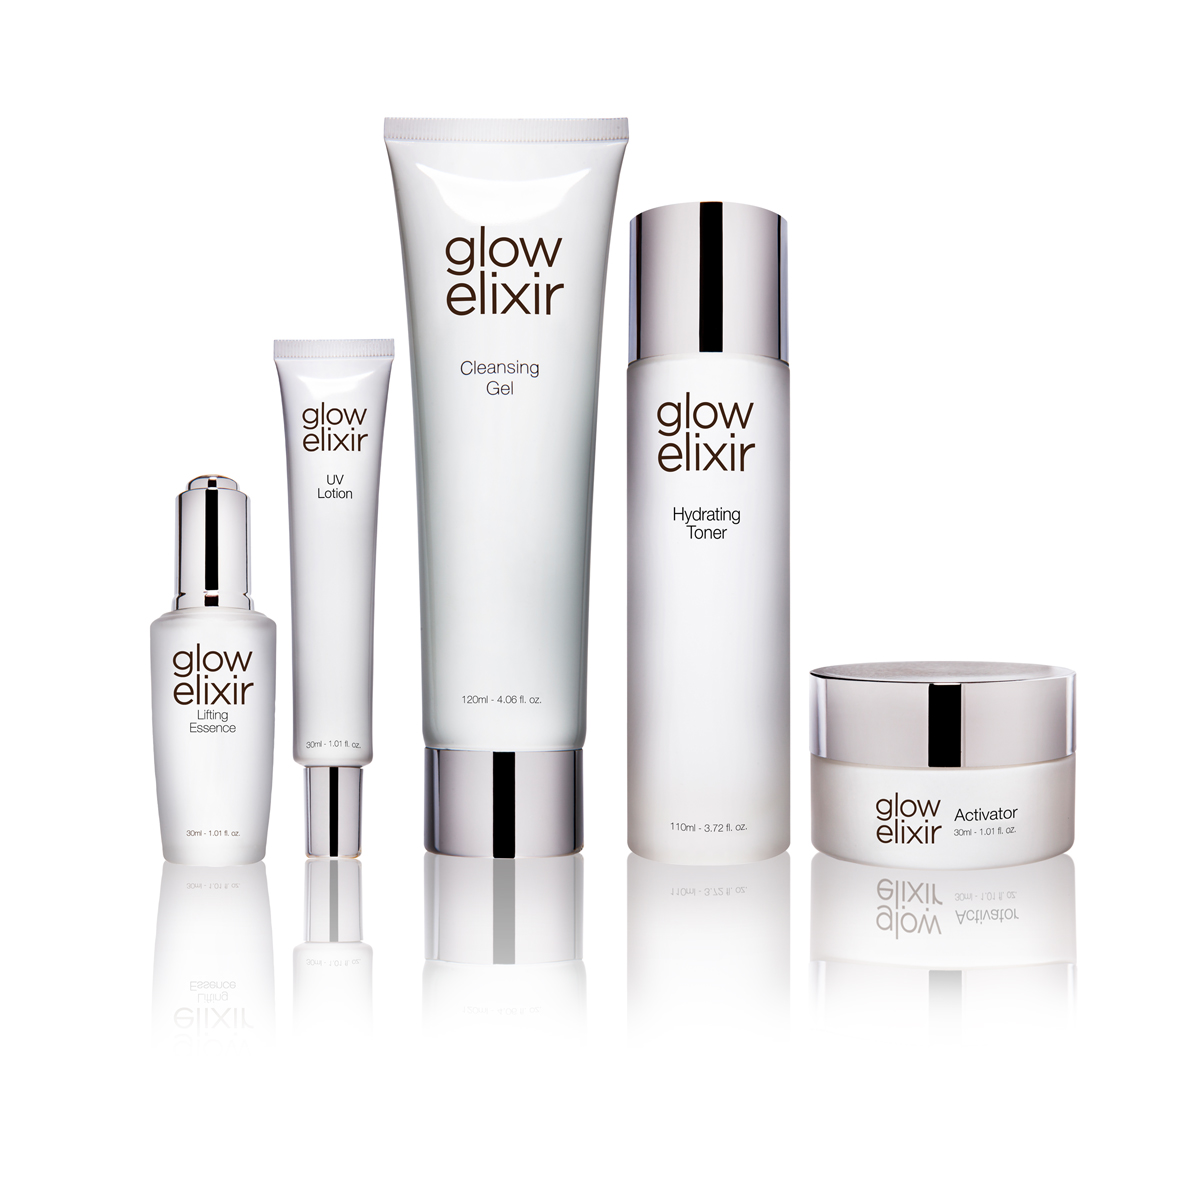 Glow Elixir Products